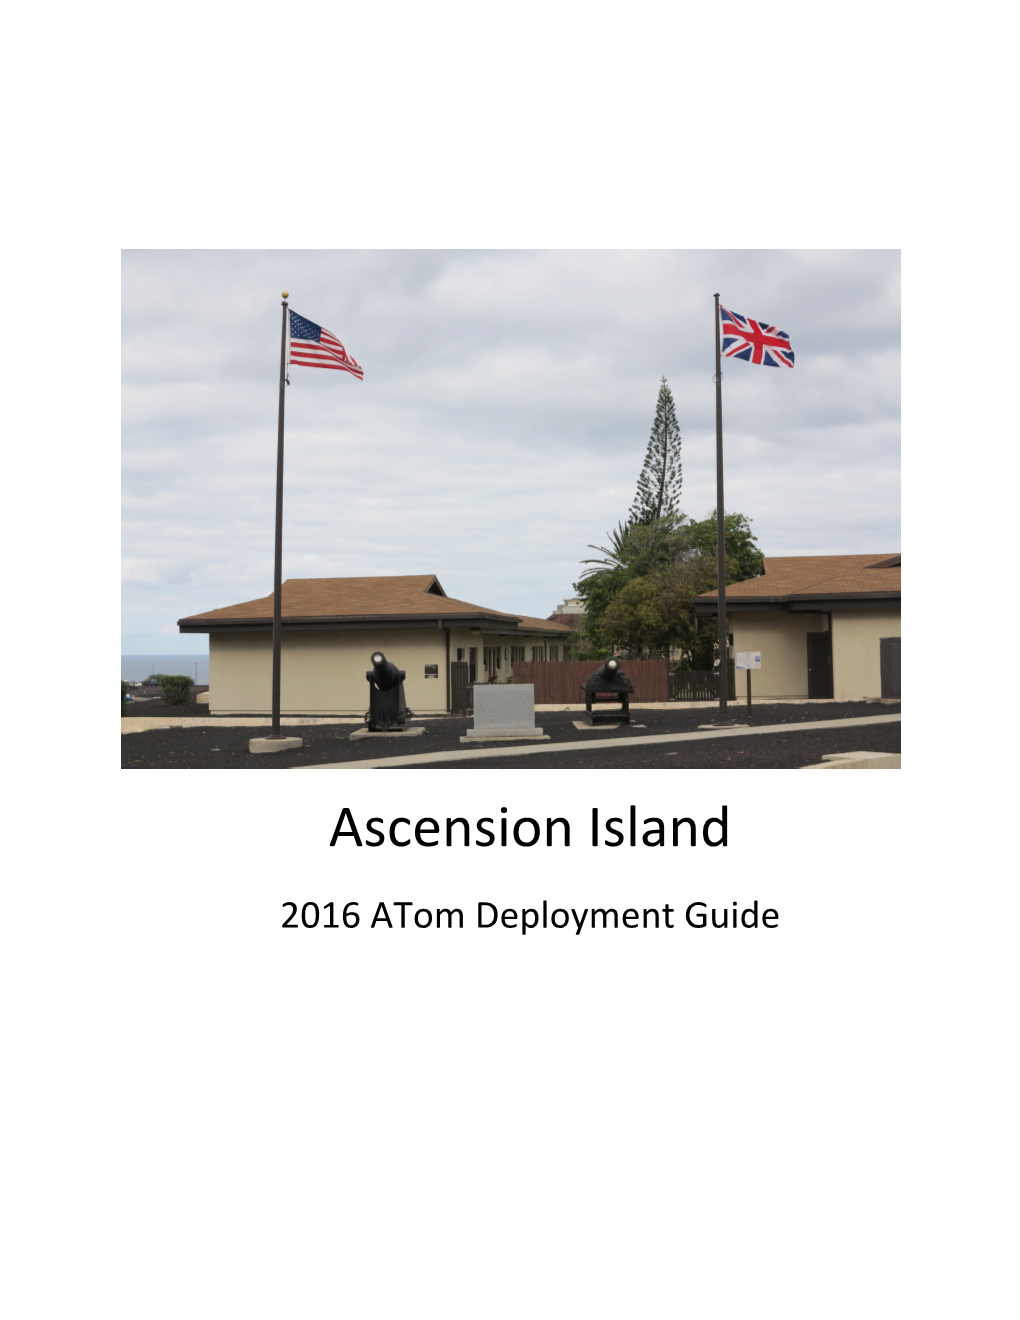 Ascension Island 2016 Atom Deployment Guide